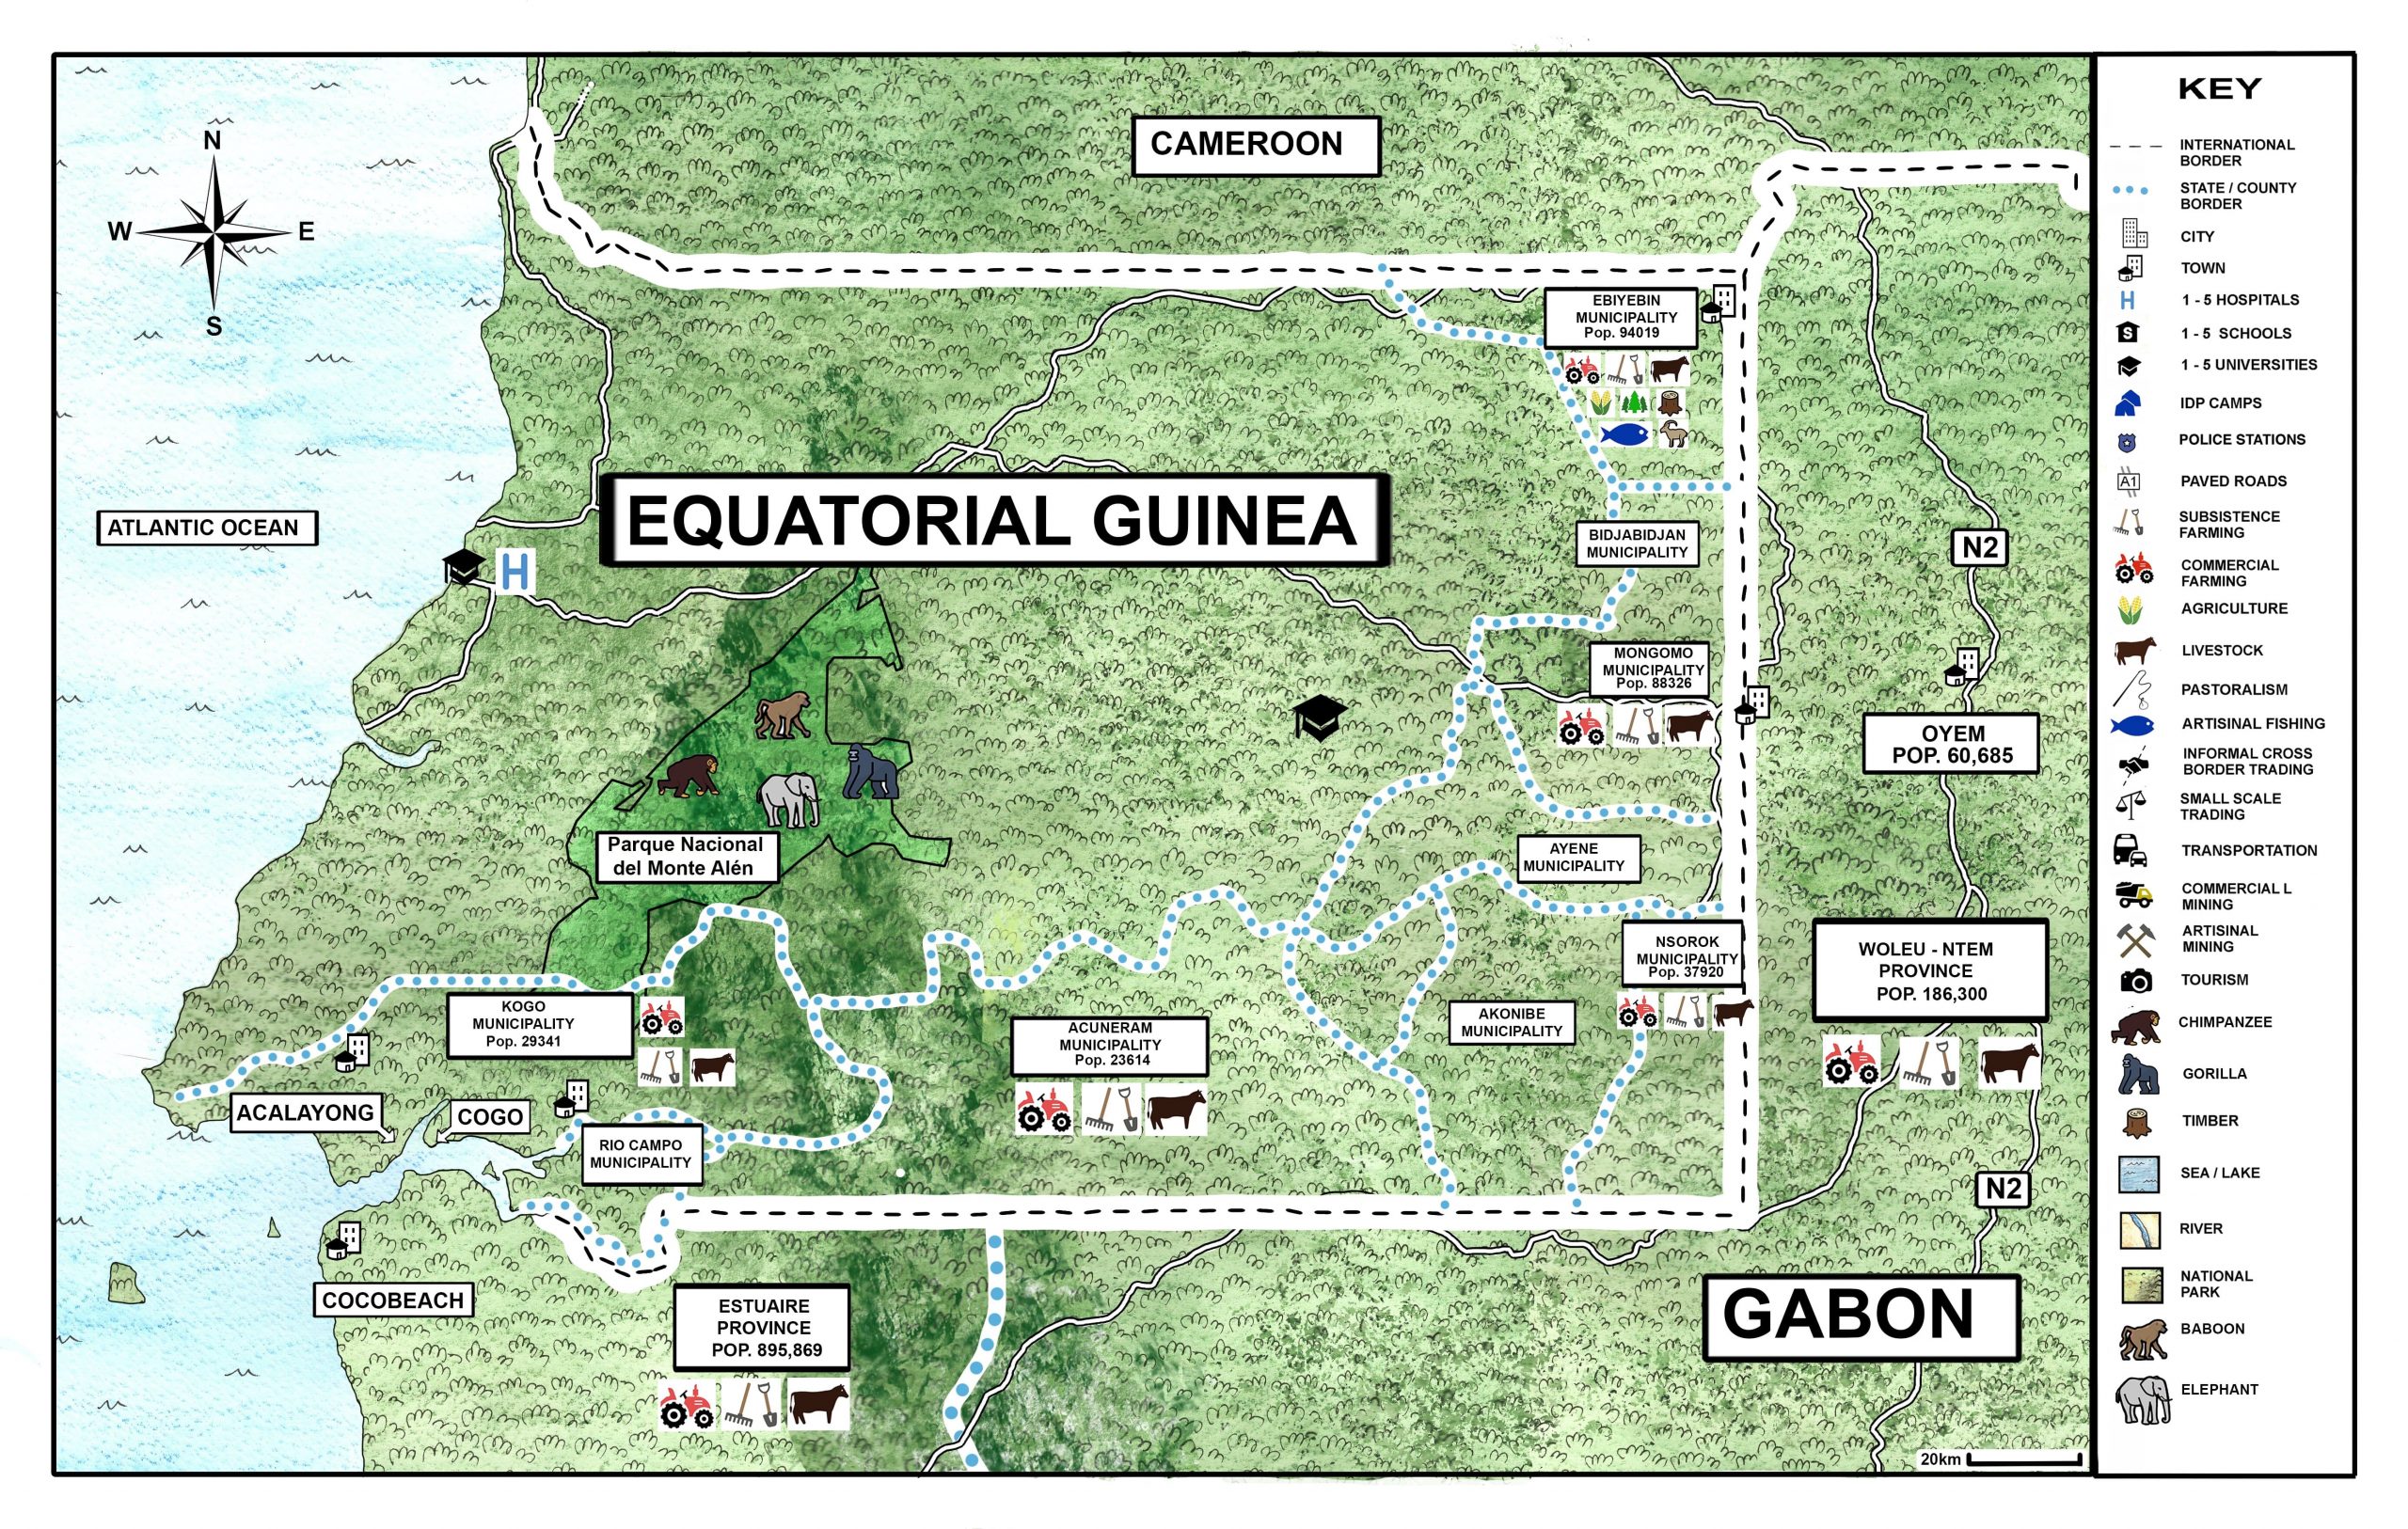 EQUATORIAL GUINEA - GABON_illustration